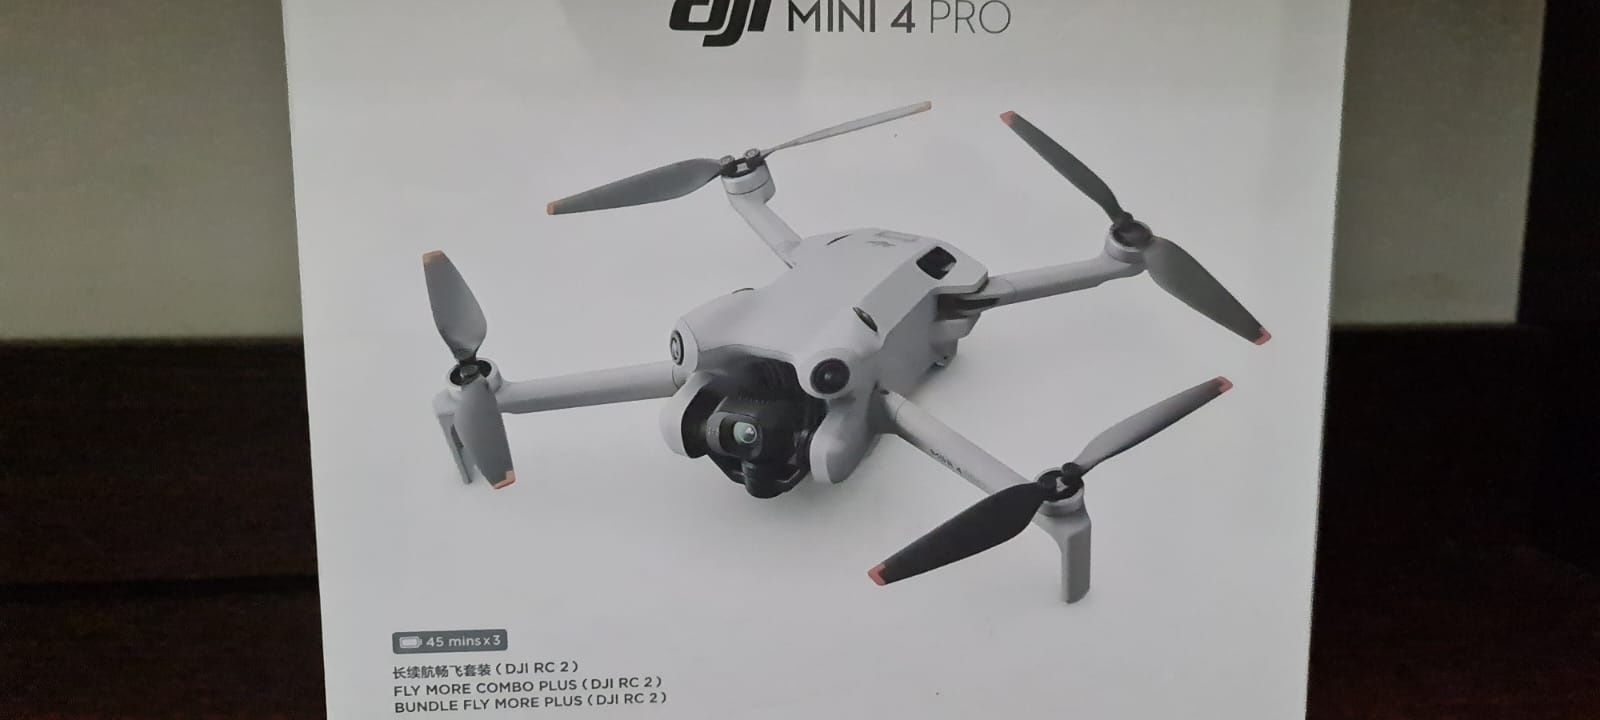 DJI MINI 4 PRO Fly more combo plus квадрокоптер, дрон